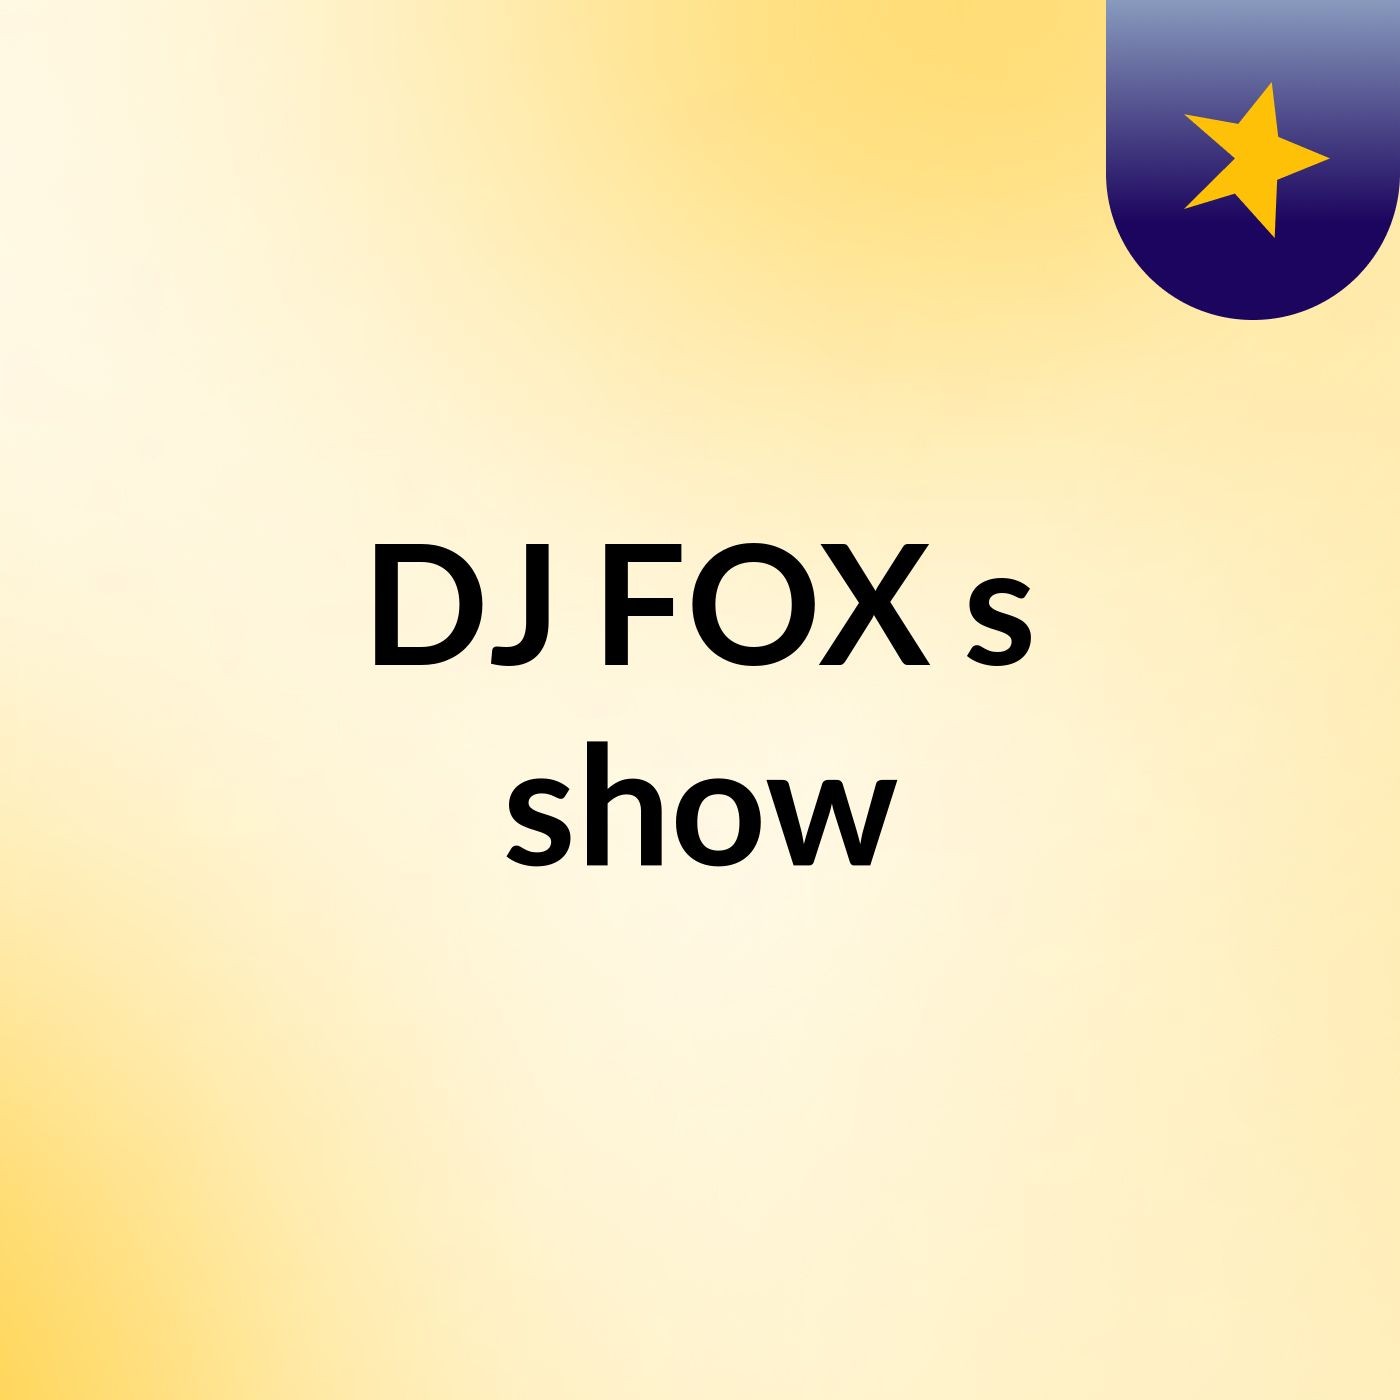 DJ FOX's show